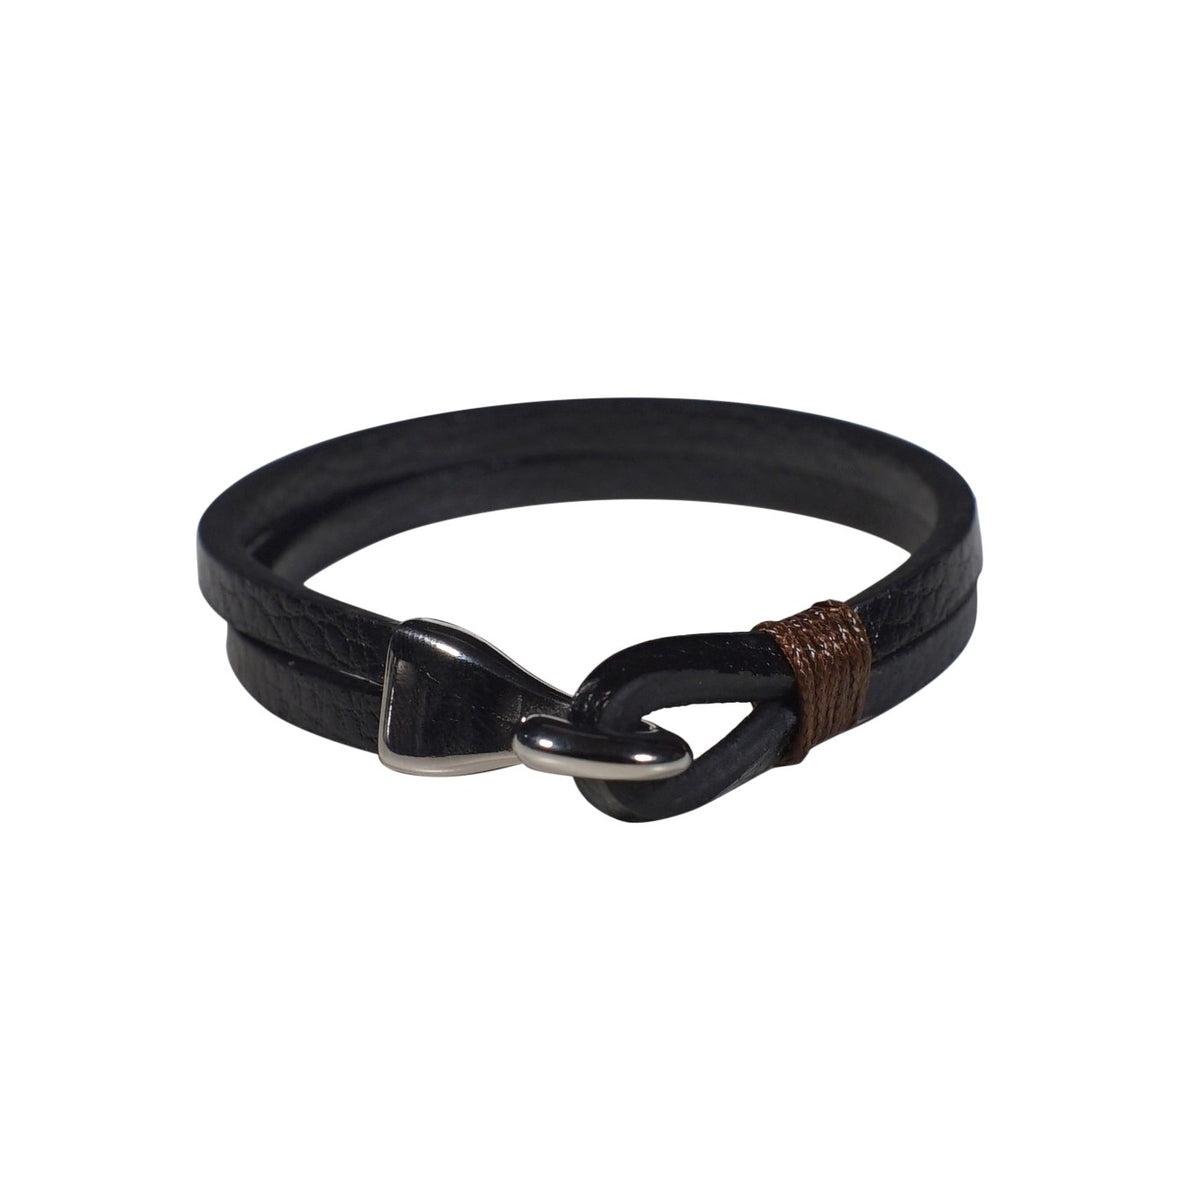 Lincoln Leather Bracelet in Black (Size L) - Nomad watch Works